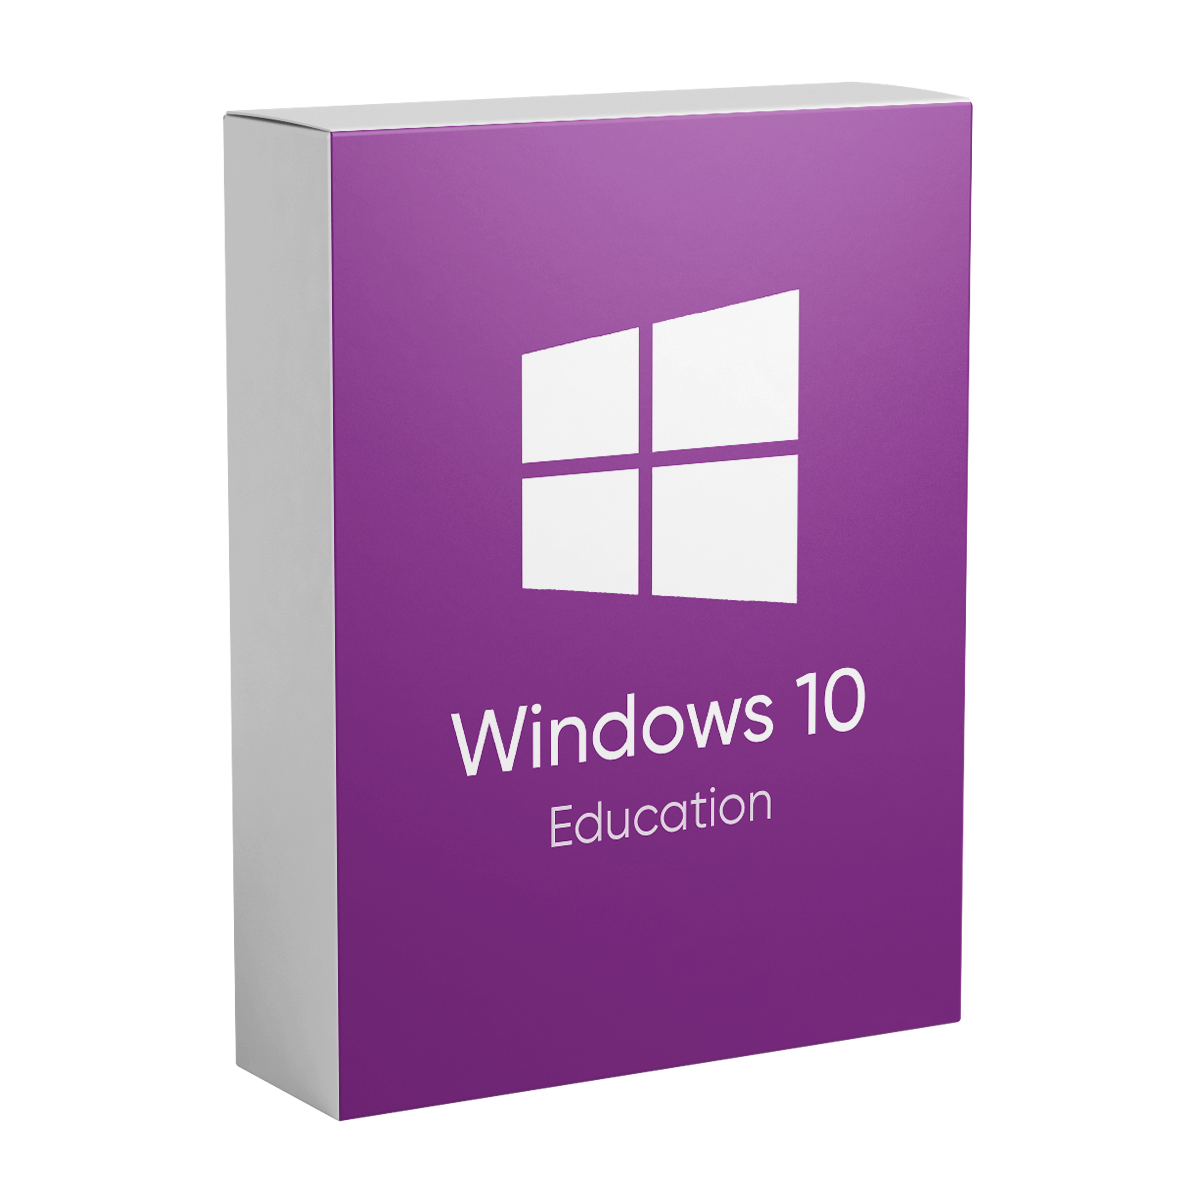 Windows 10 Education - Lifetime License for 1 PC